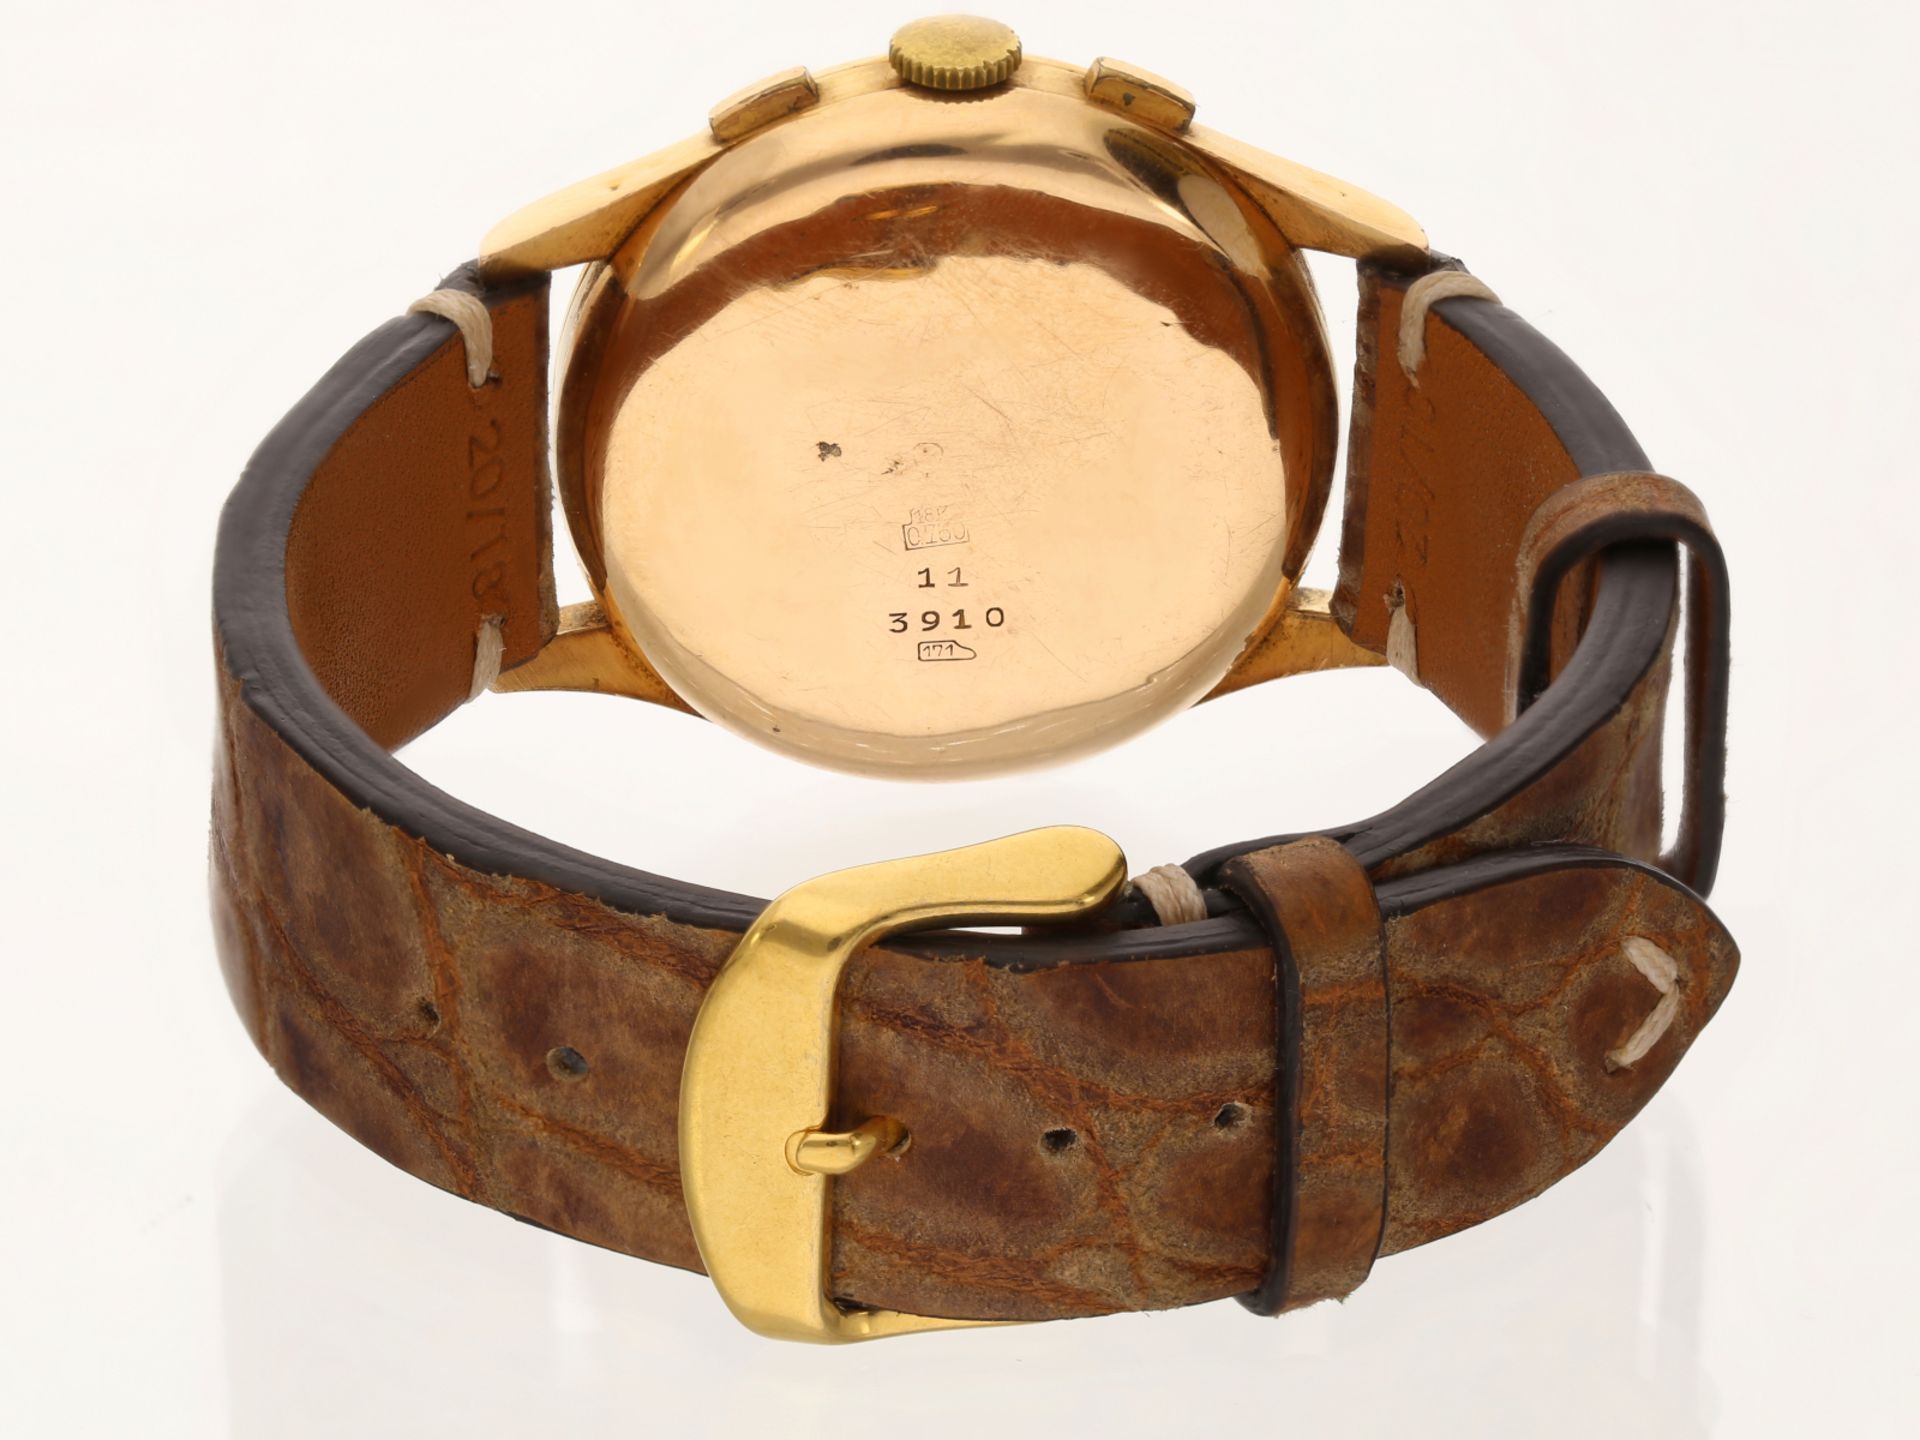 Armbanduhr: vintage overzise "Chronographe Suisse" Ref.3910 in 18K Gold, mit Box, 1950er - Image 3 of 3